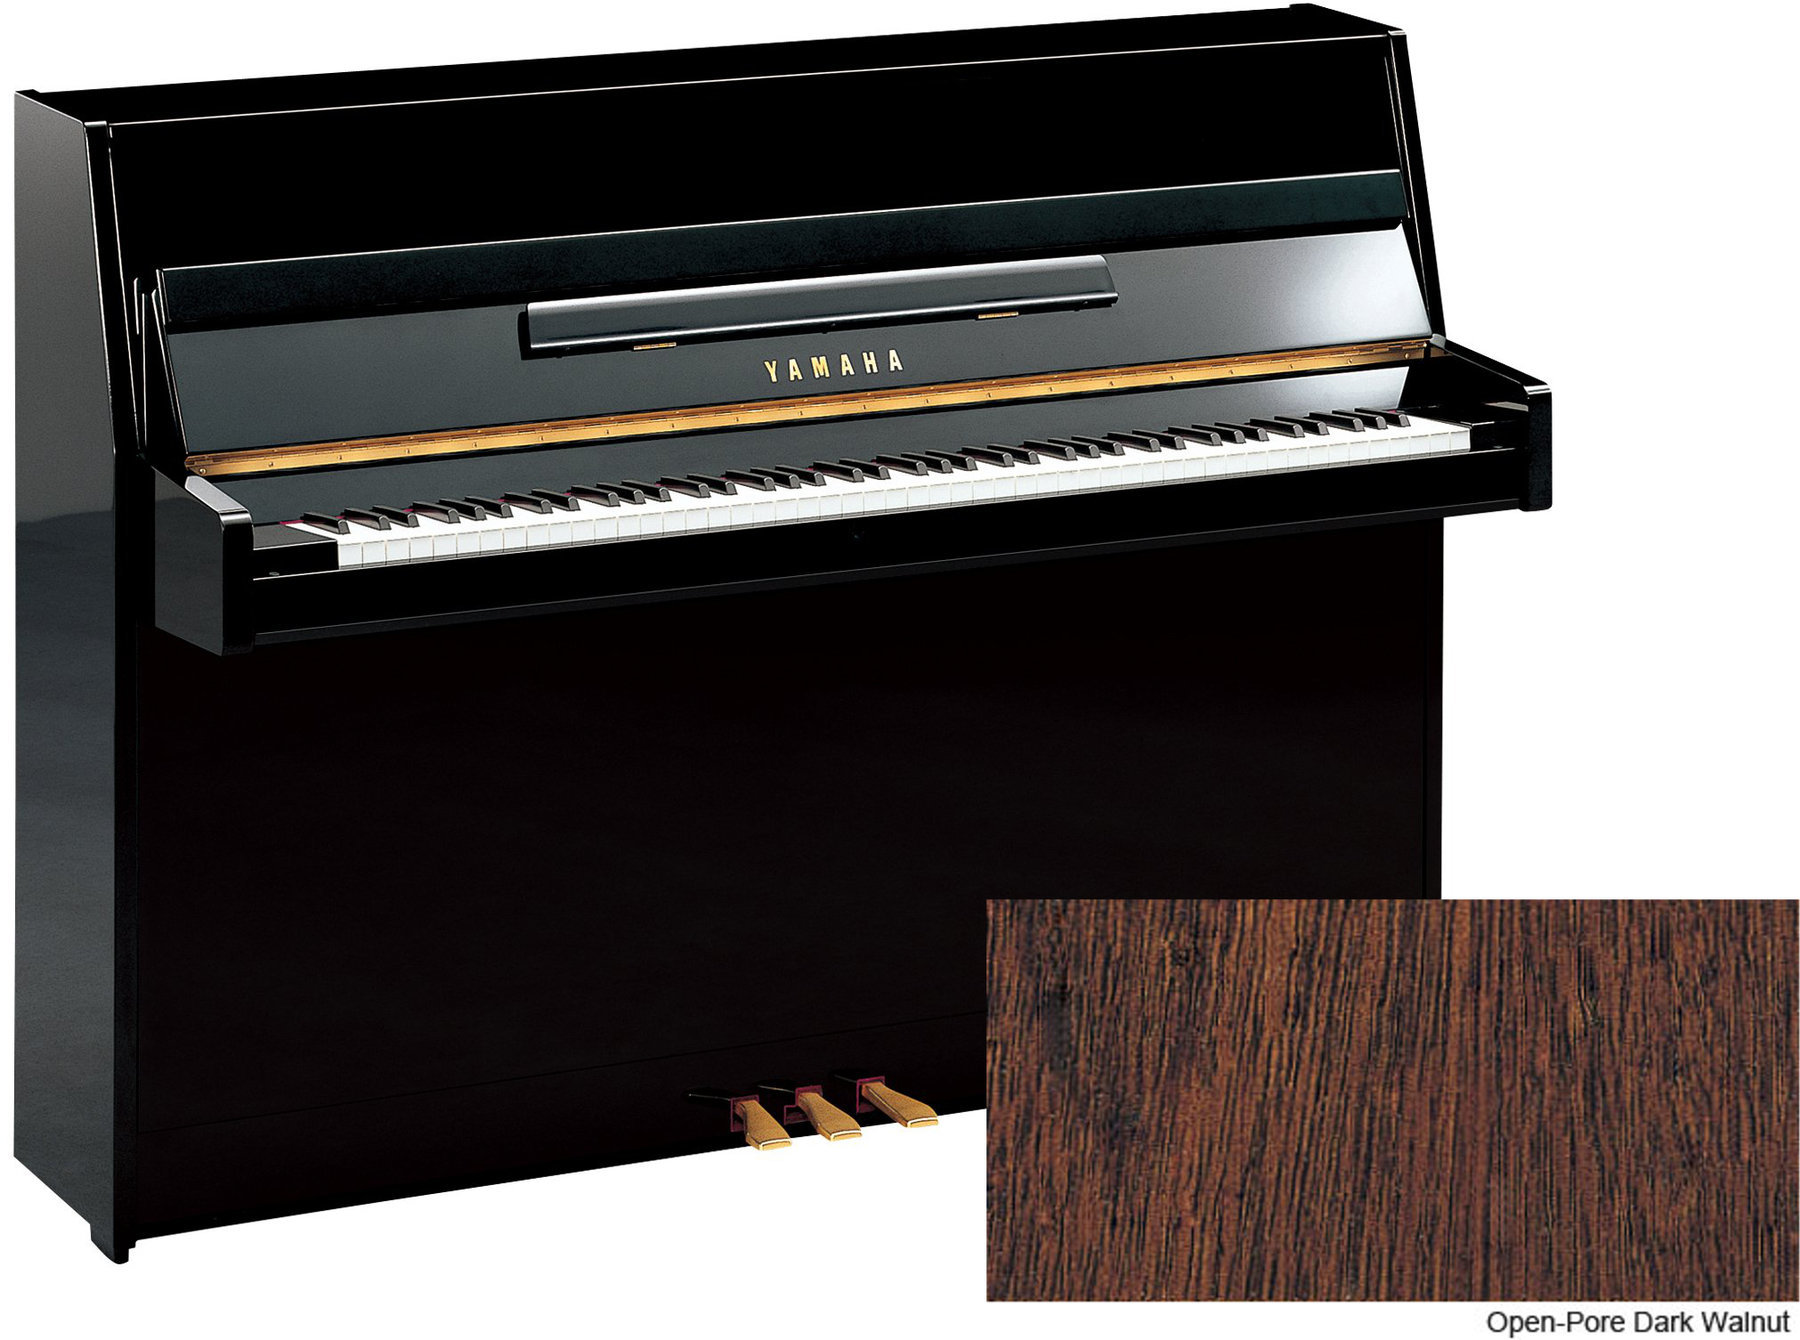 Piano Yamaha B1-OPDW Open-Pore Dark Walnut